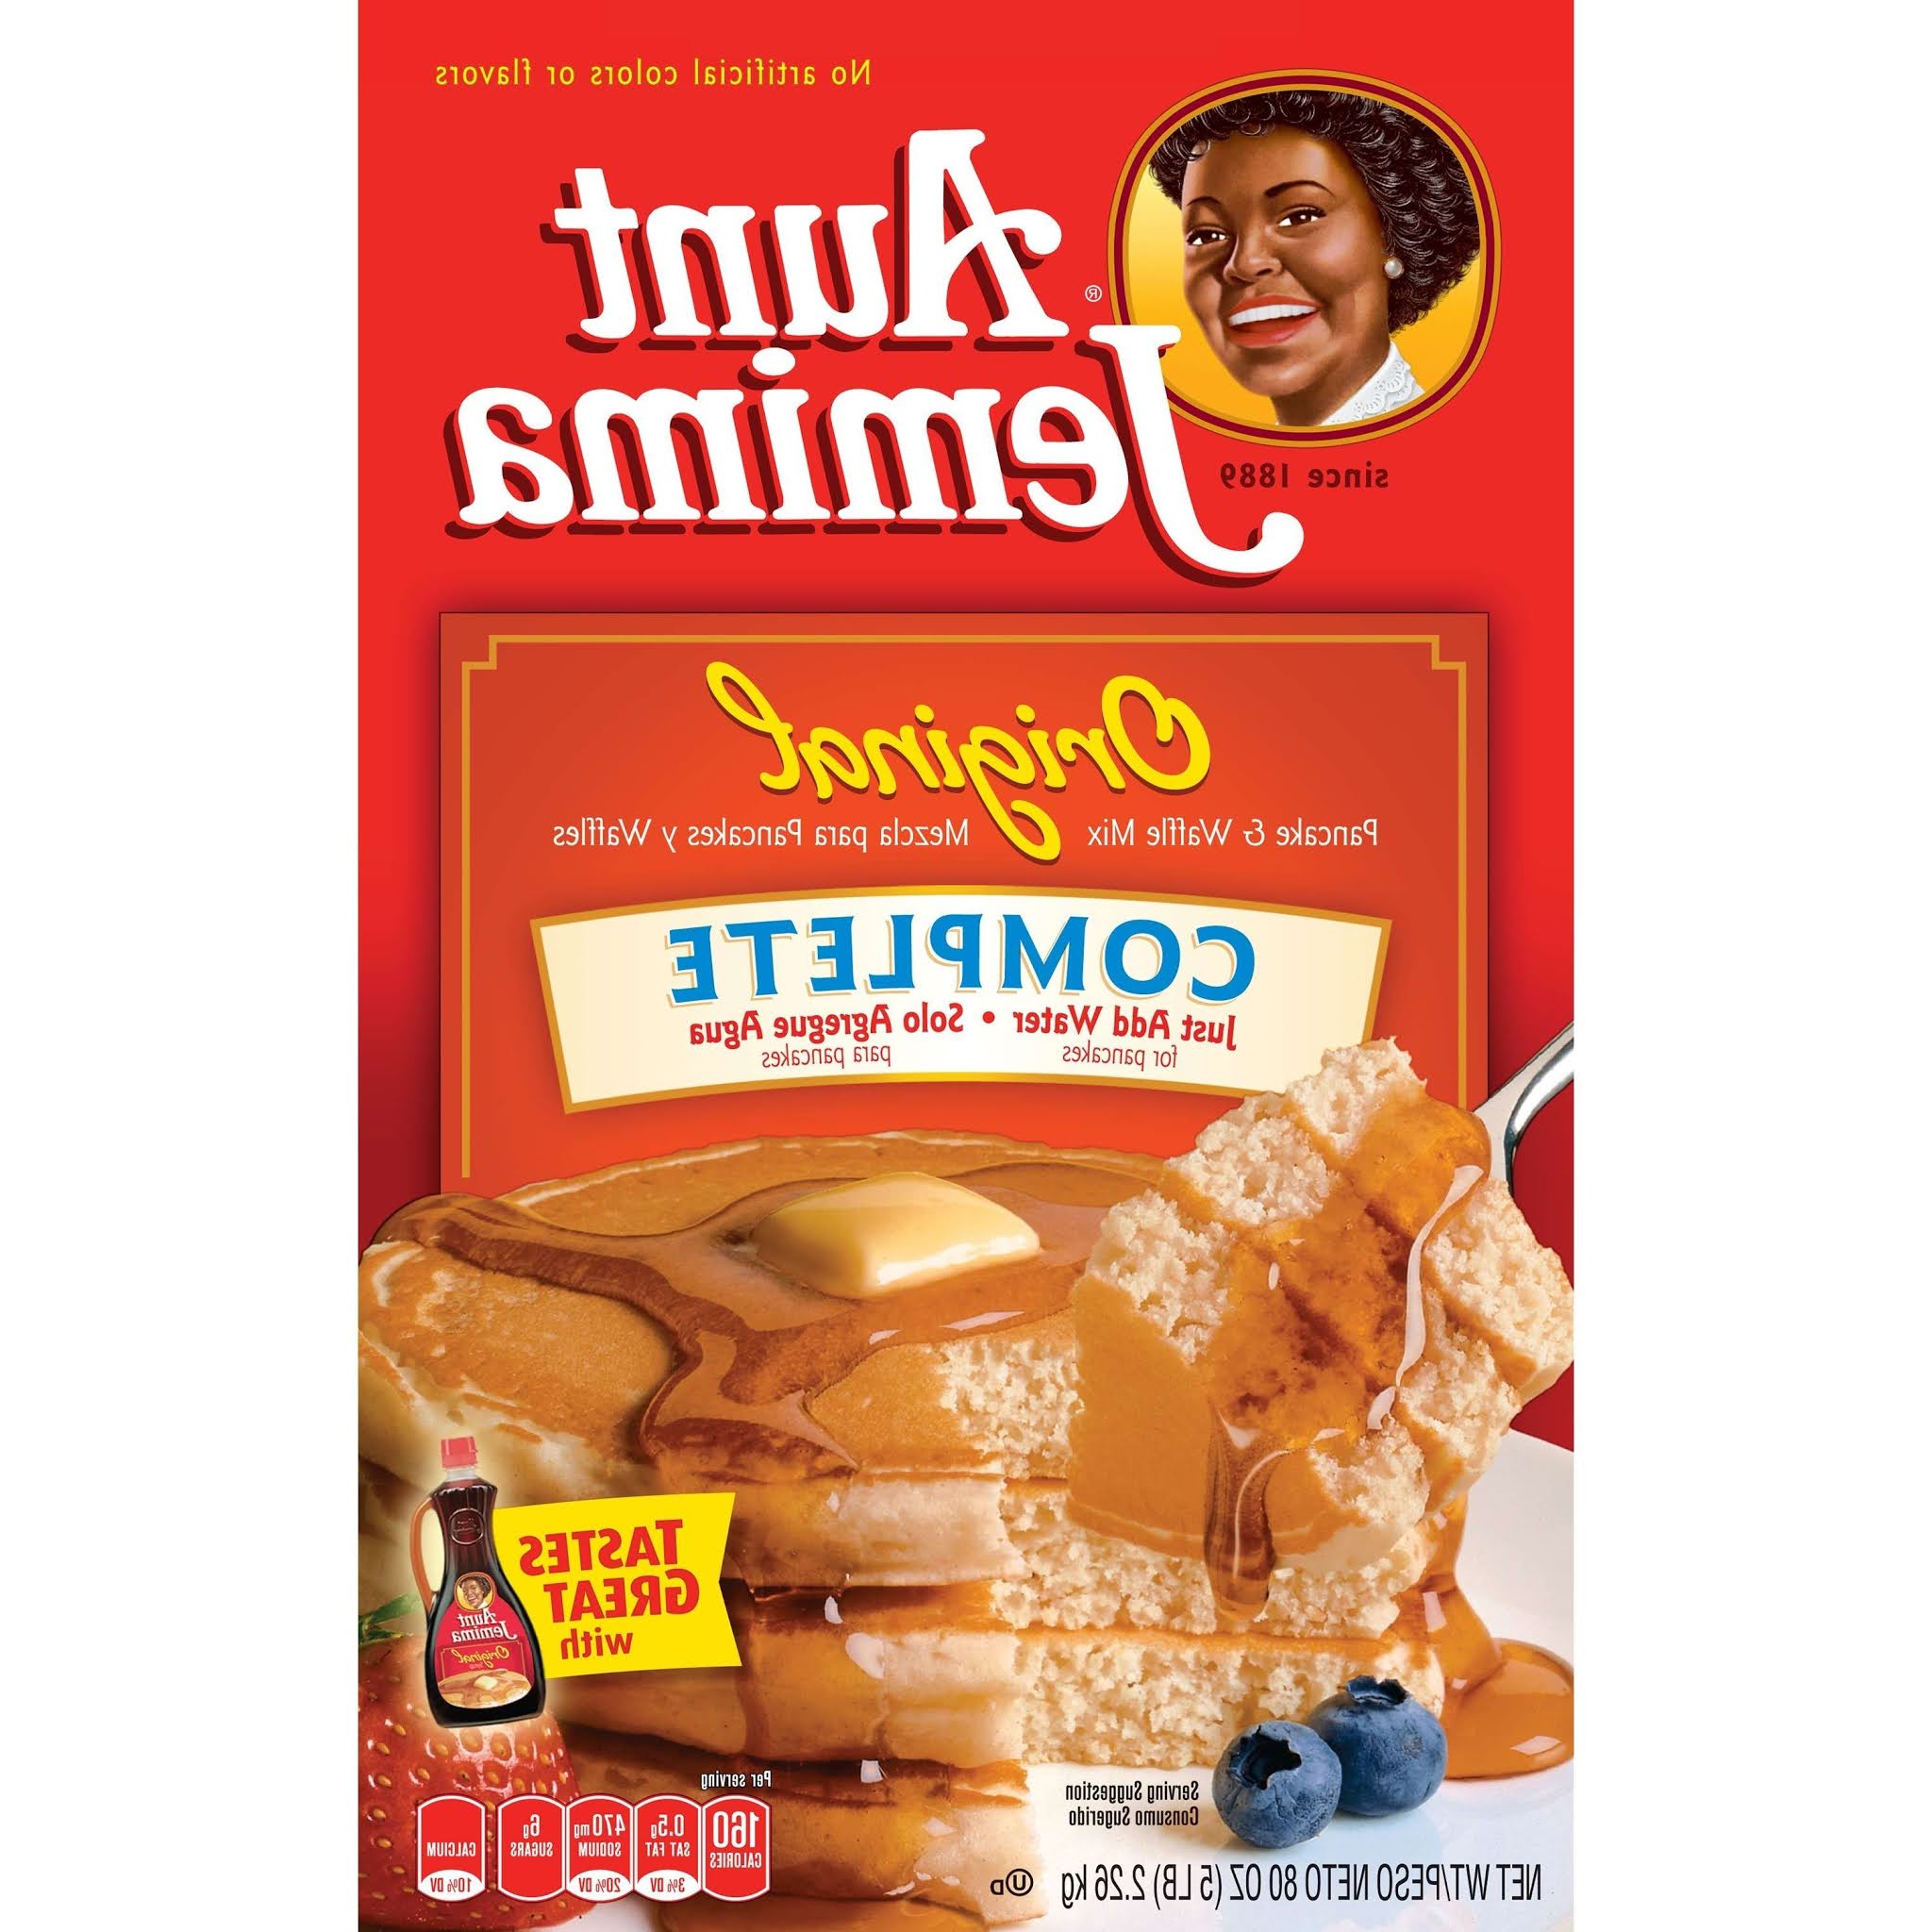 Pancake Recipe Aunt Jemima Box Bread Coconut Flour 2021